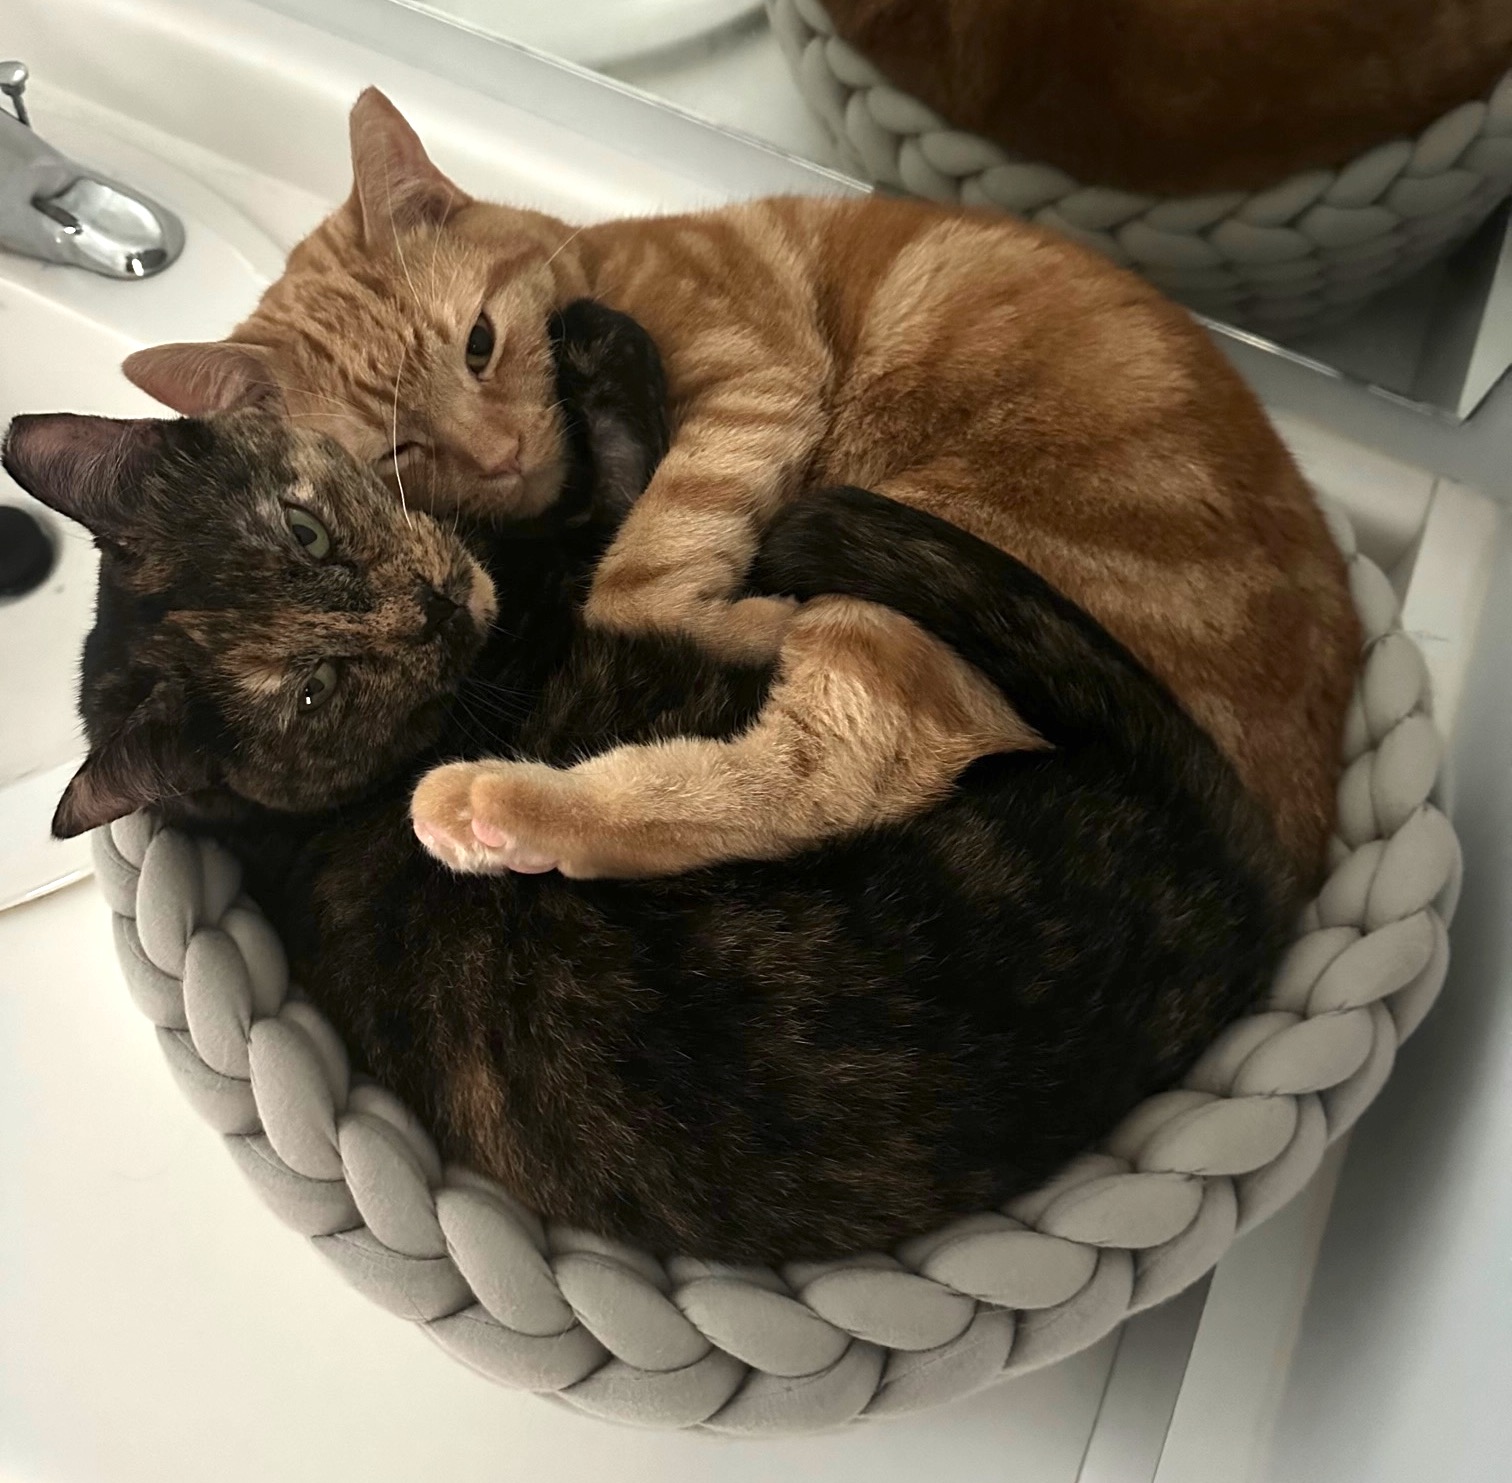 GinGin and Lollipop cuddling in a basket